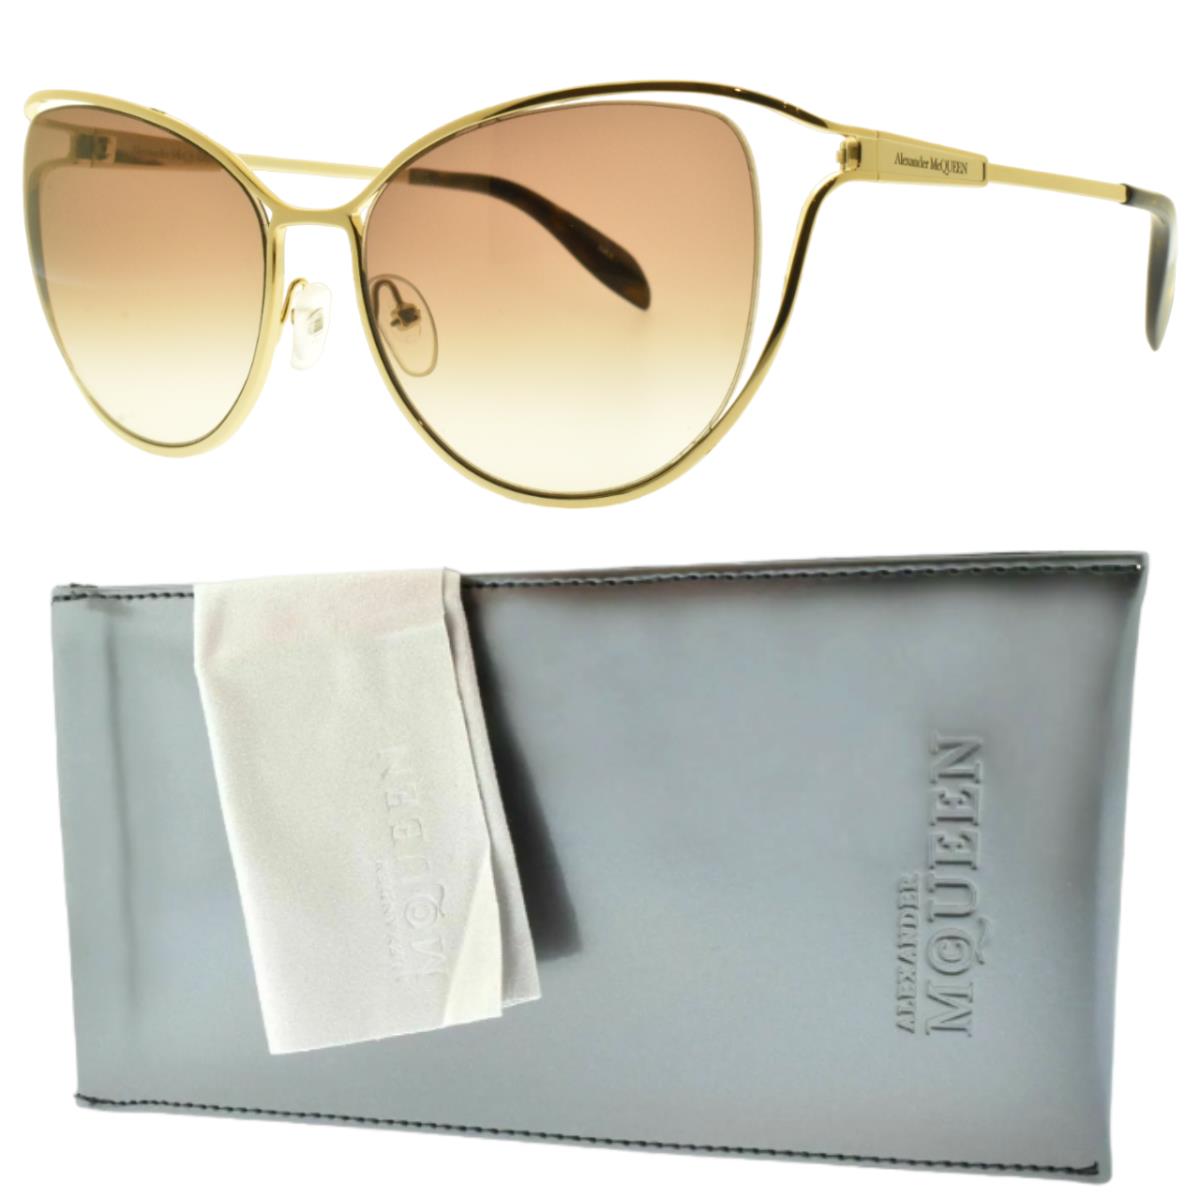 Alexander Mcqueen AM 0194S 002 Gold Cateye Full Rim Women Sunglasses